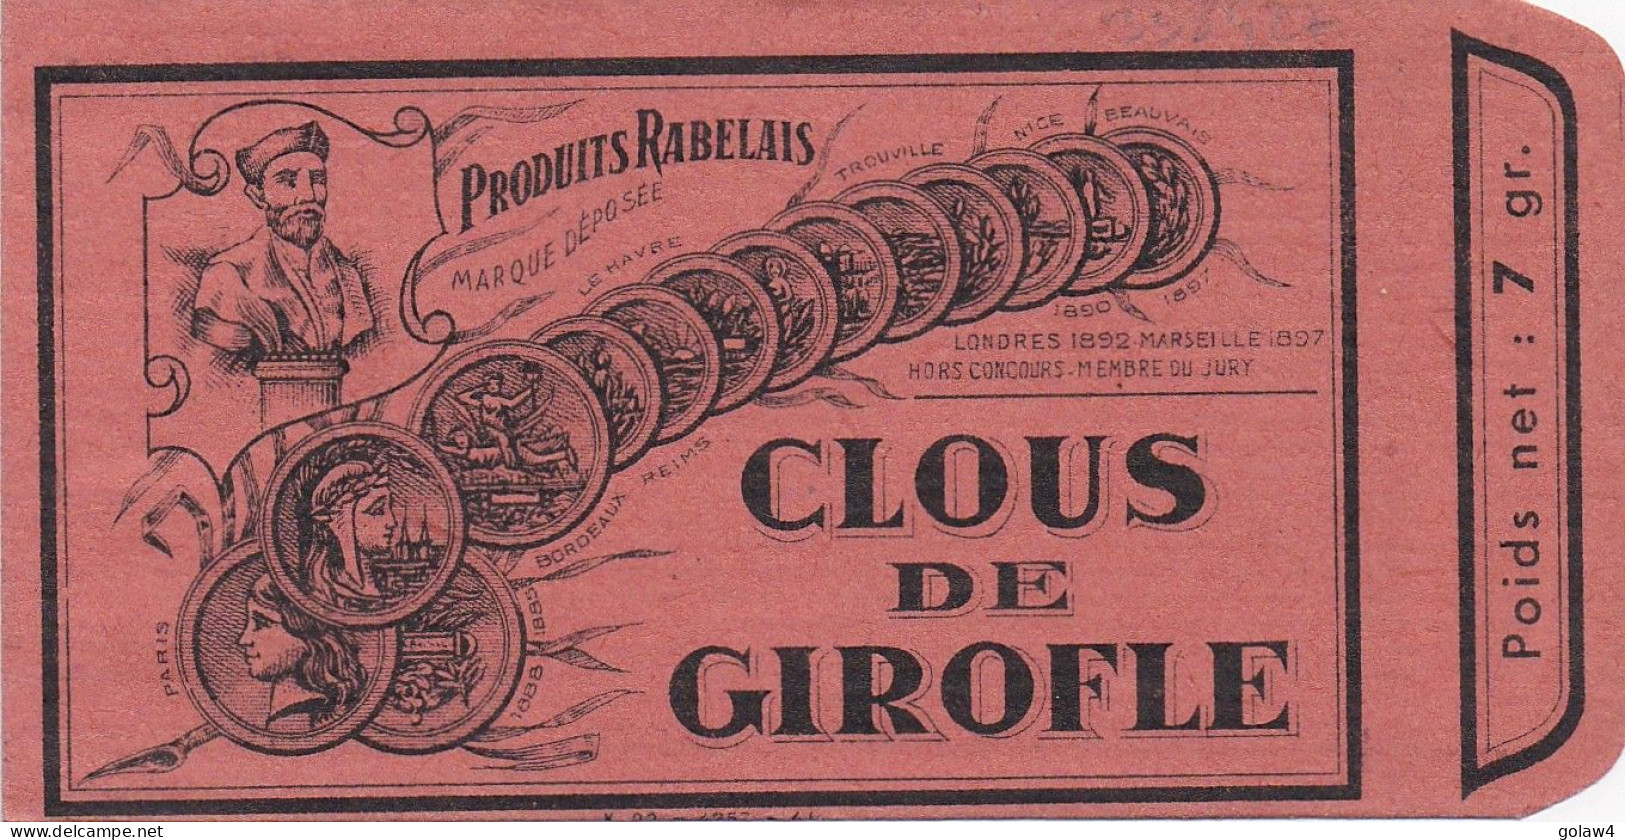 33842# SACHET CLOUS DE GIROFLE PRODUITS RABELAIS POIDS NET 7 Gr EPICE - Material Und Zubehör